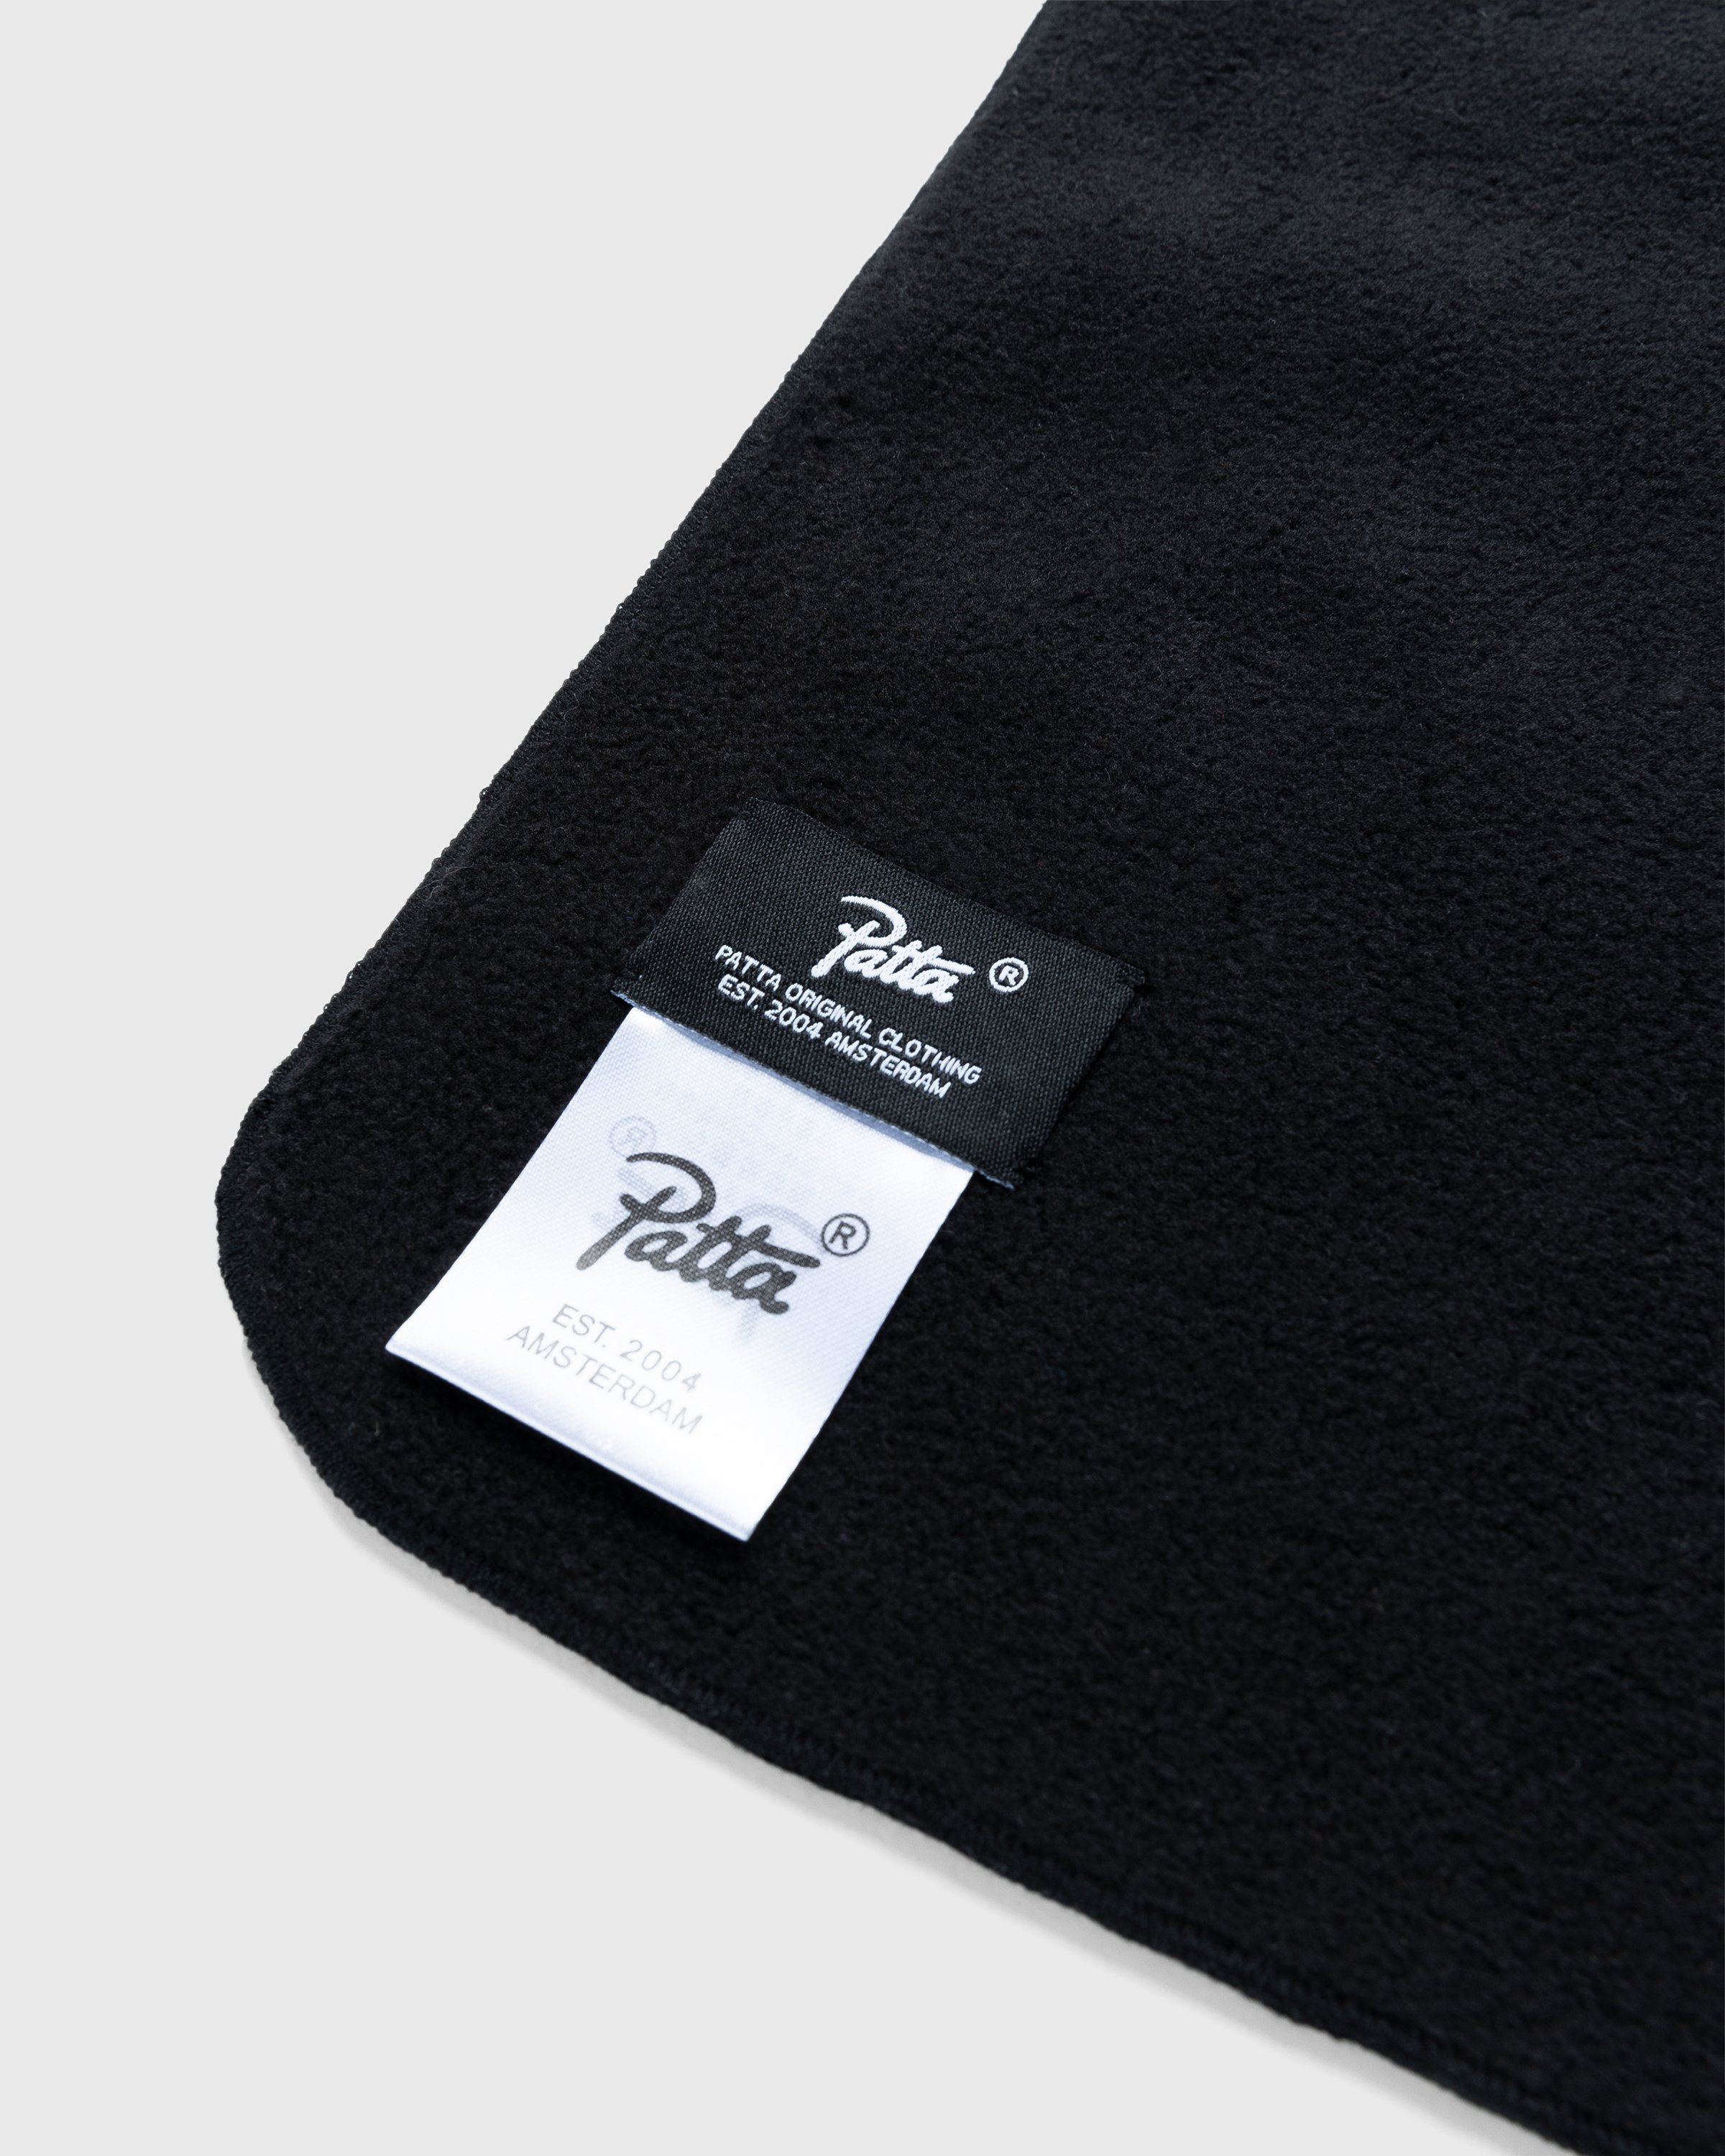 Patta - Fleece Scarf Black - Accessories - Black - Image 4